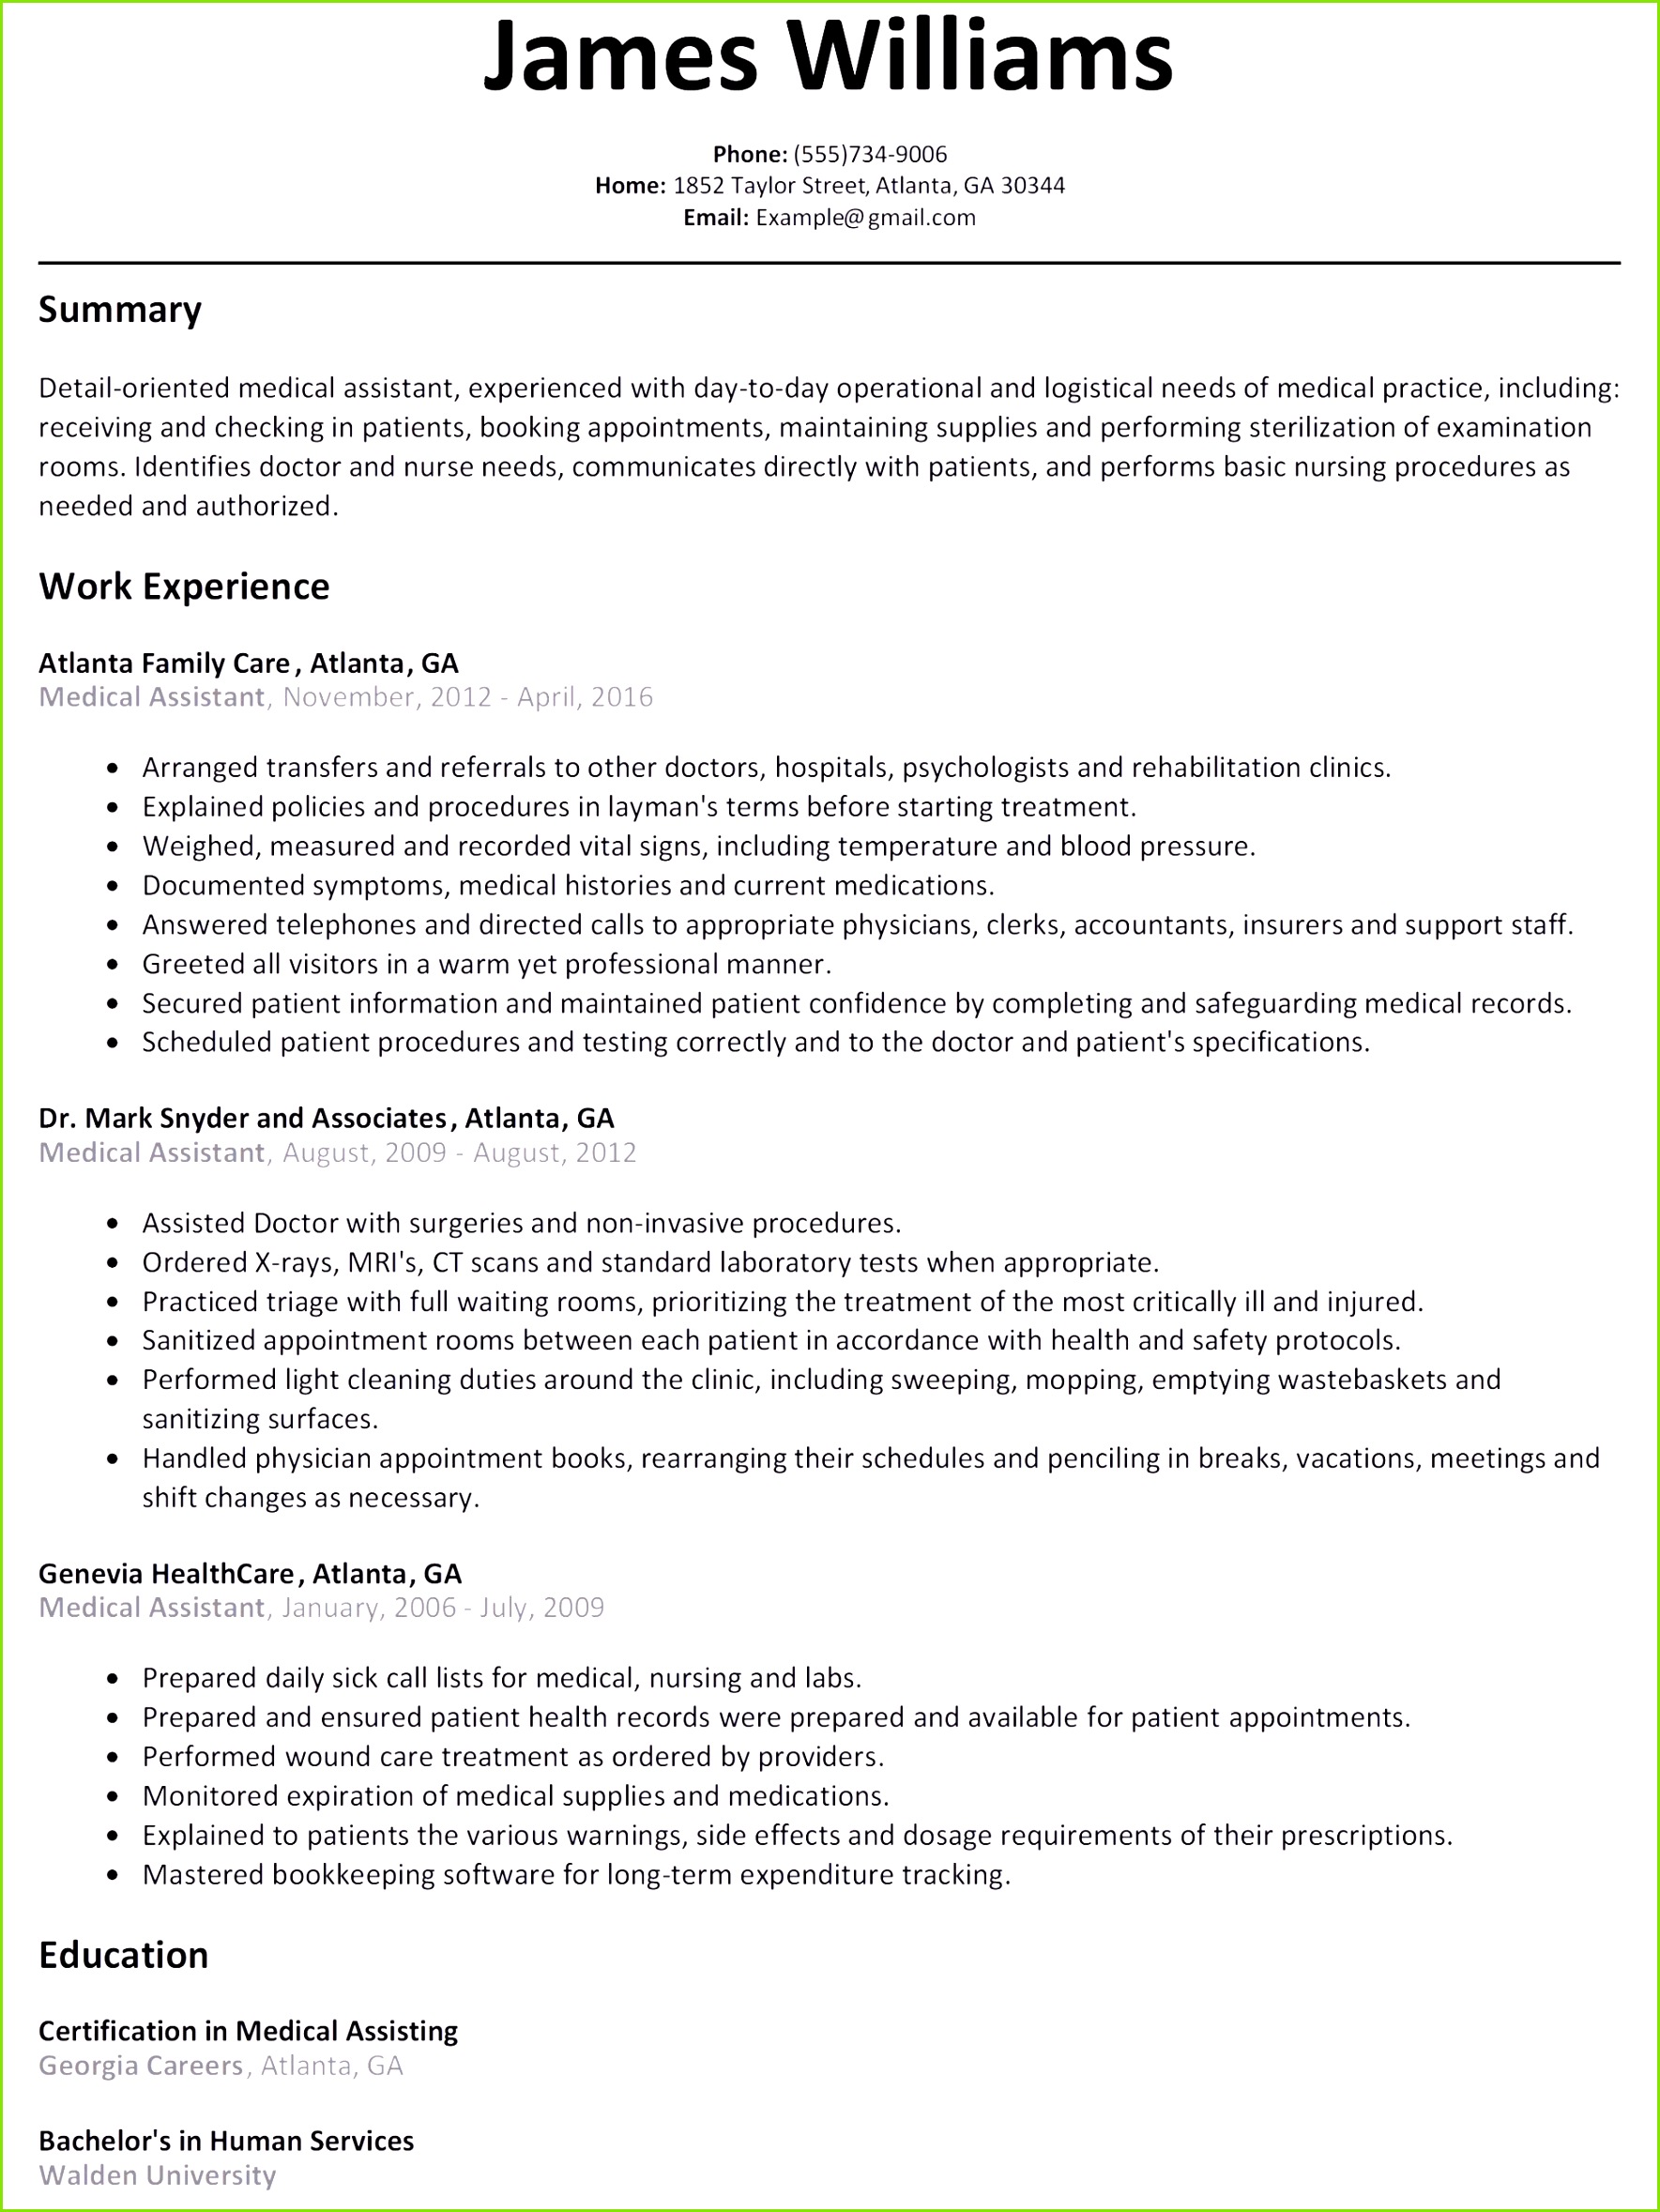 Employee Newsletter Templates Free Beautiful Resume Designs Templates Luxury Resume Template Free Word New Od